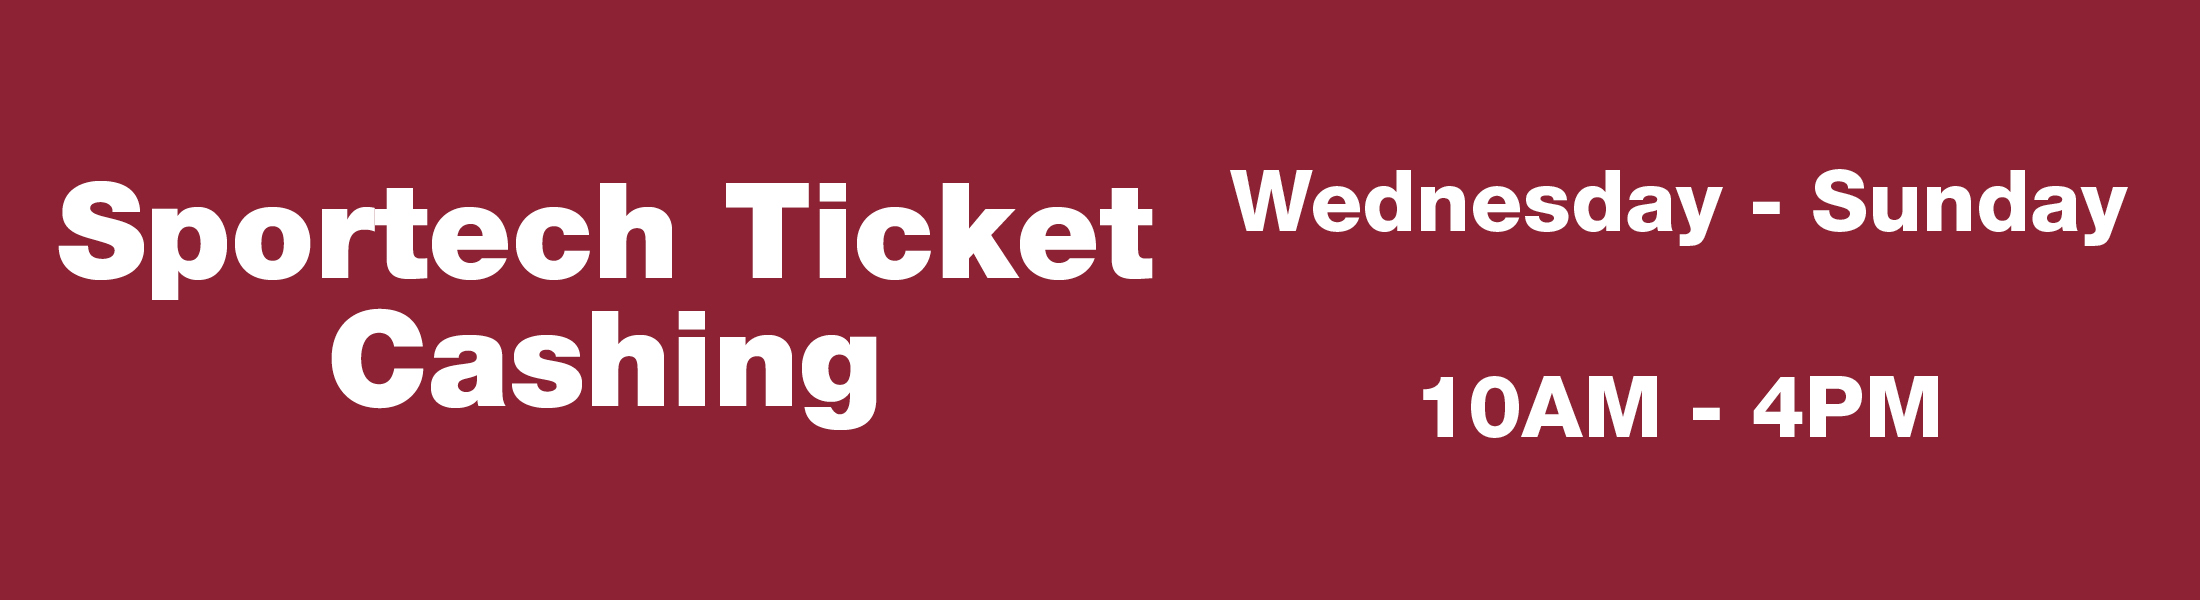 Sportech Ticket Cashing | Wednesday - Sunday | 10AM - 4PM